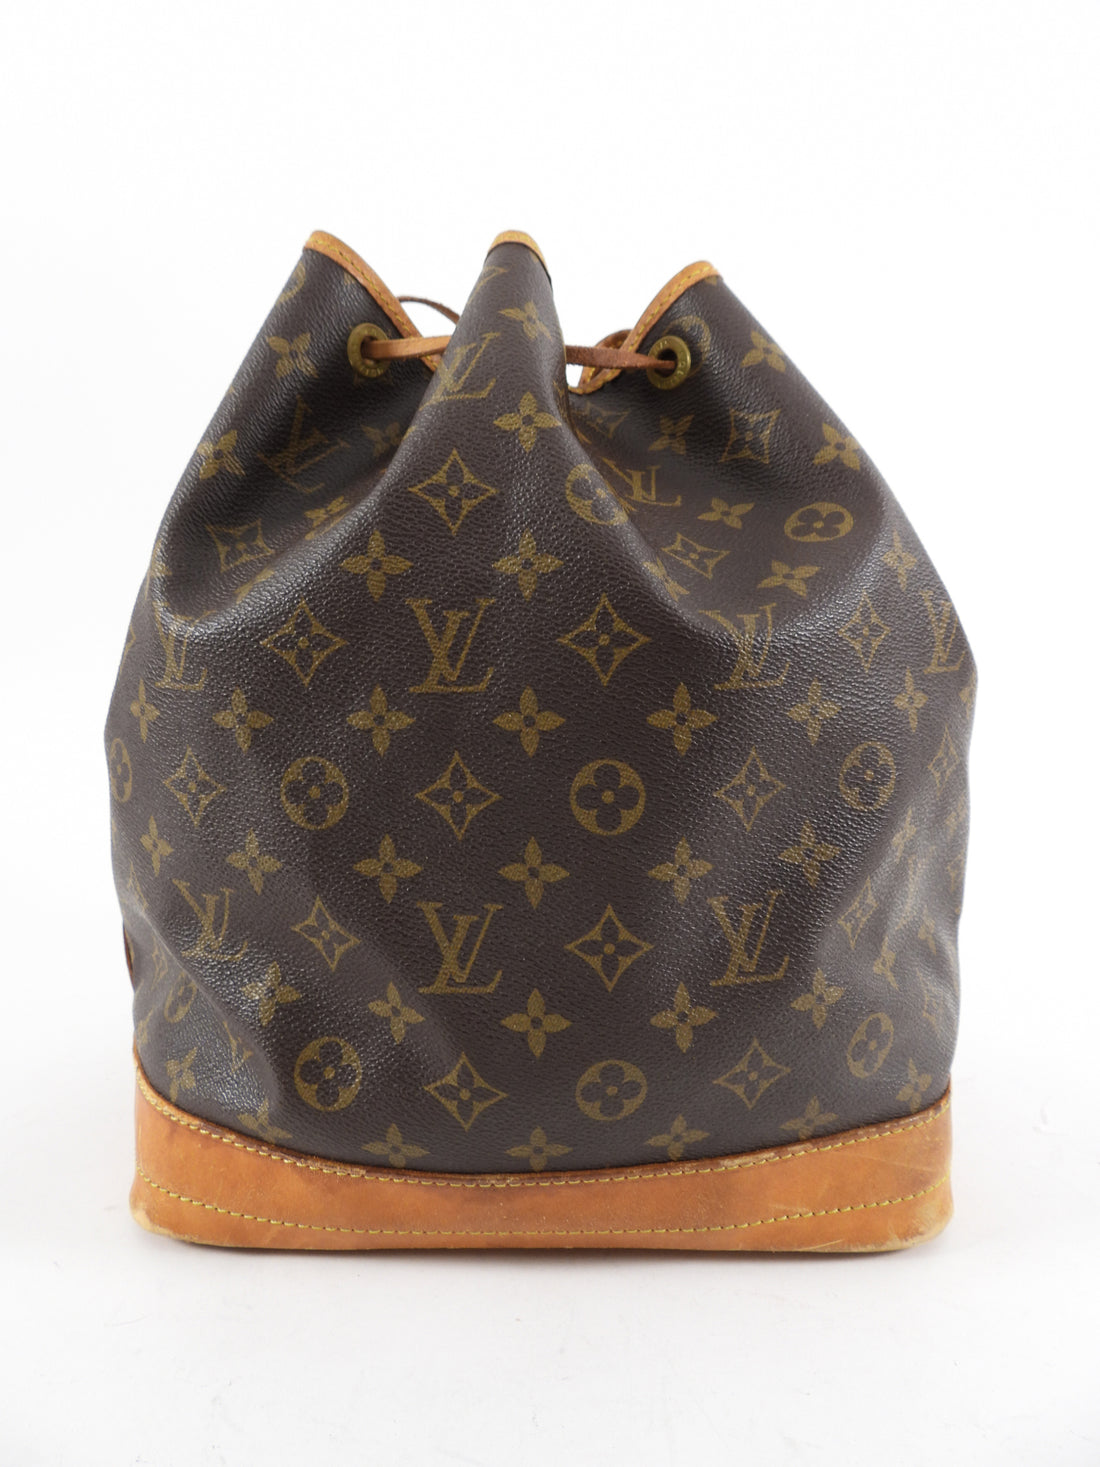 Louis Vuitton Vintage Monogram Noe GM Bucket Bag For Sale at